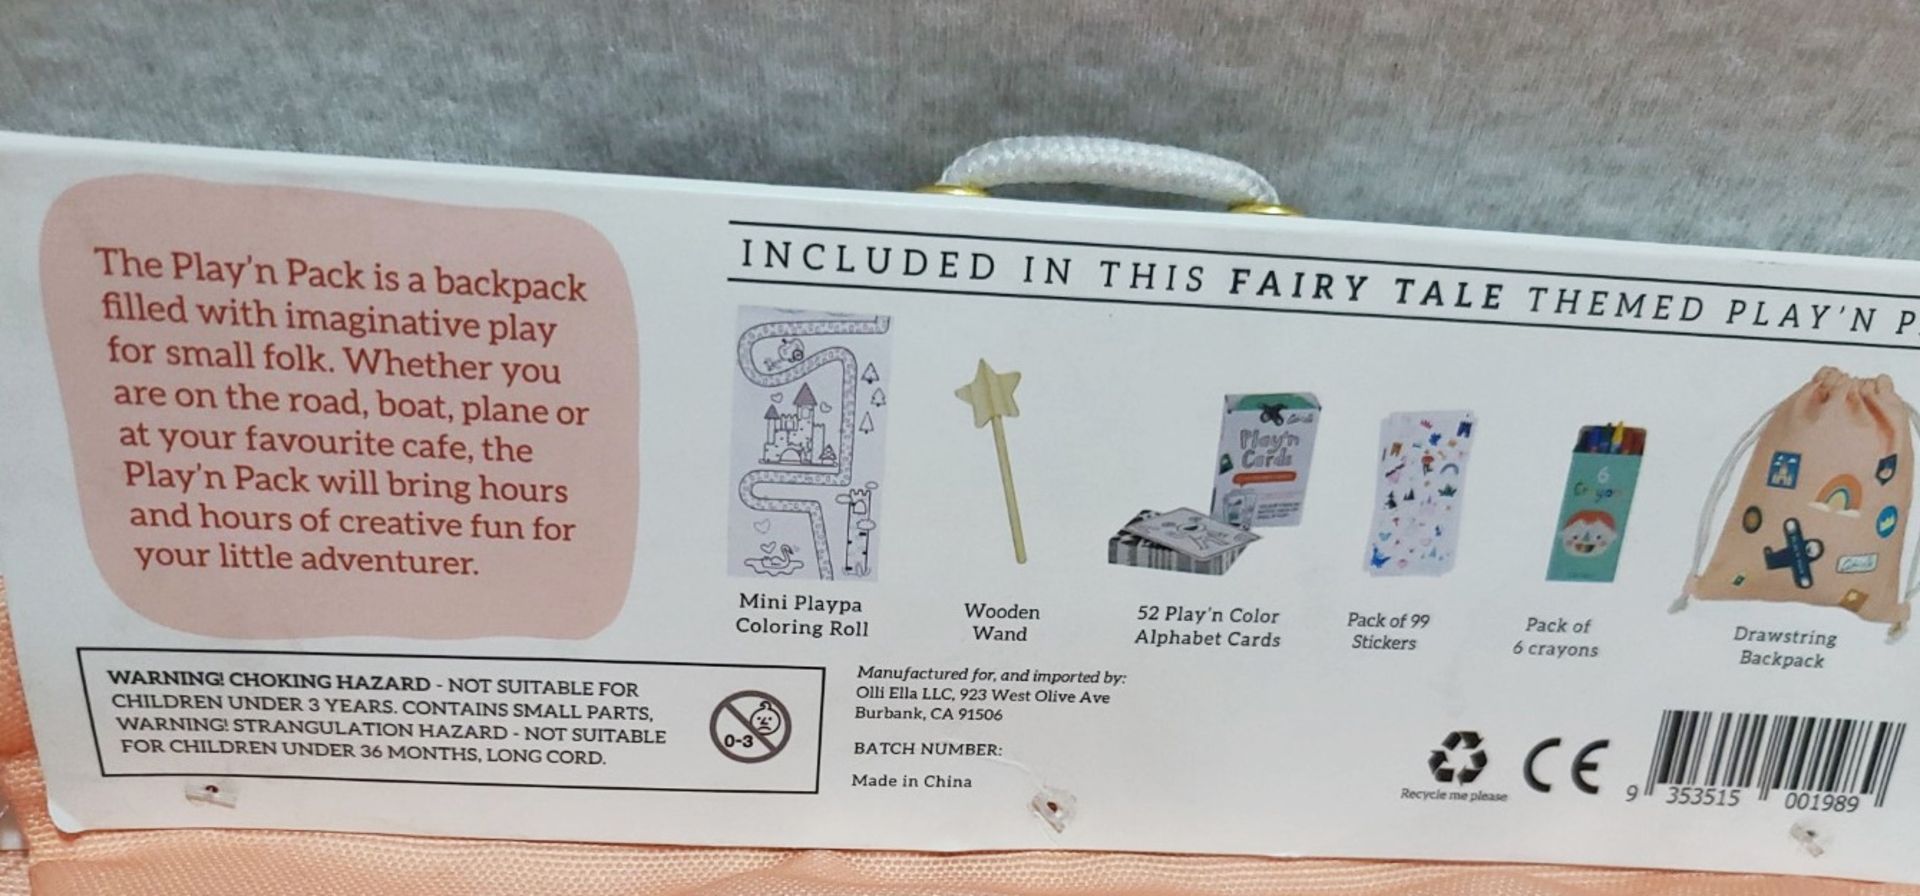 Set Of 2 x OLLI ELLA Fairy Tale Play'N Pack Backpack - Unused Boxed Stock - Image 2 of 4